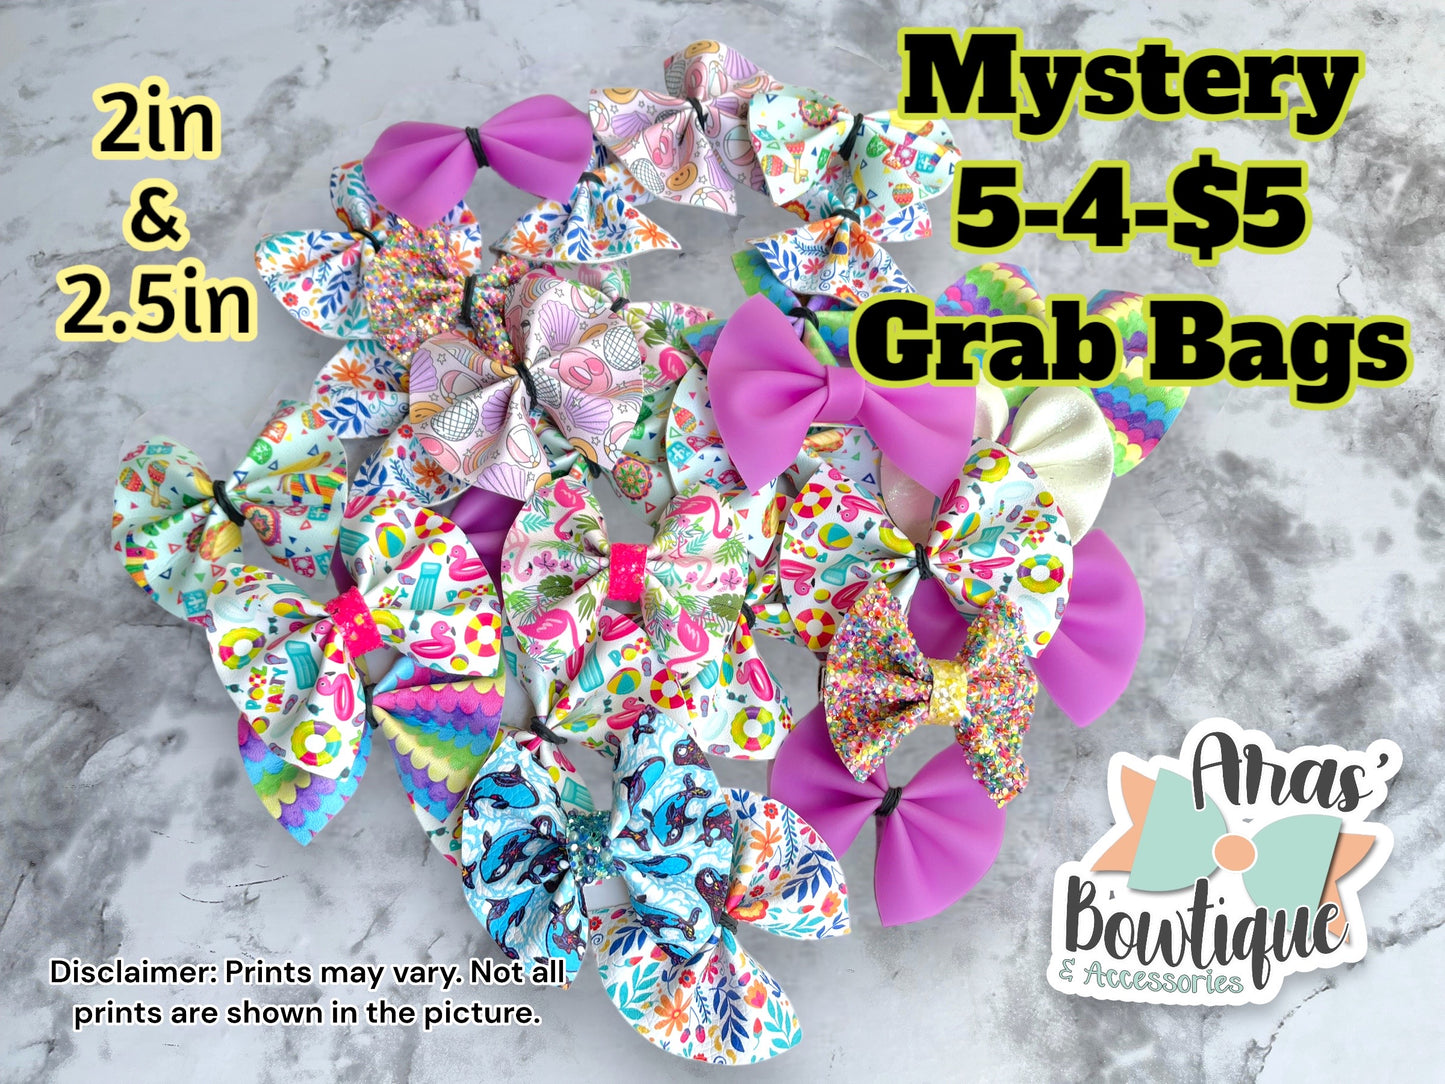 Mystery 545 Grab Bags